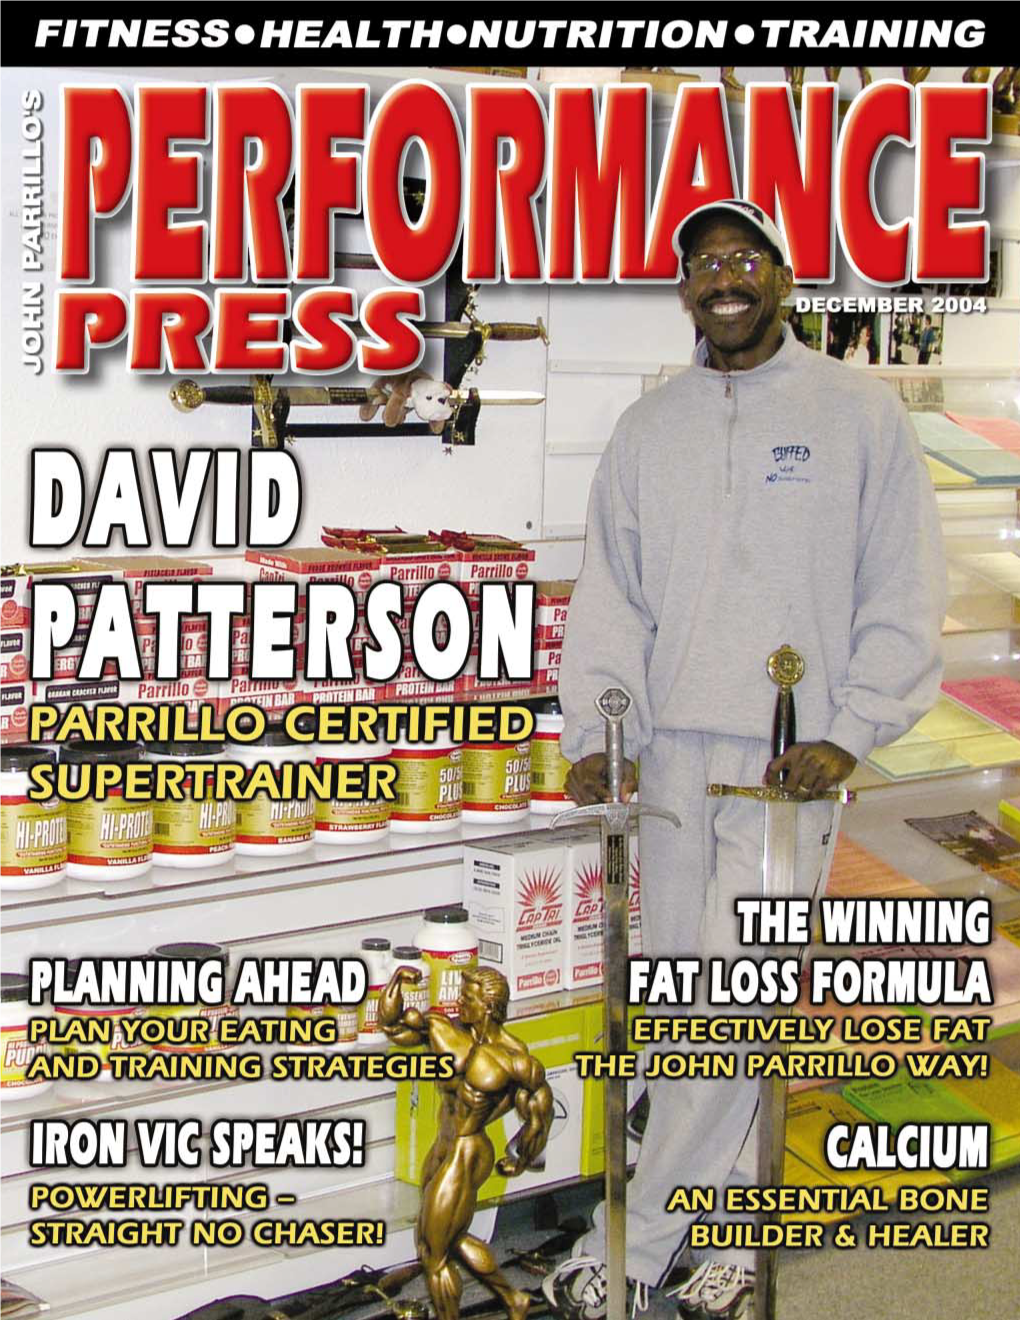 2004 / Performance Press 1-800-344-3404 DAVE PATTERSON